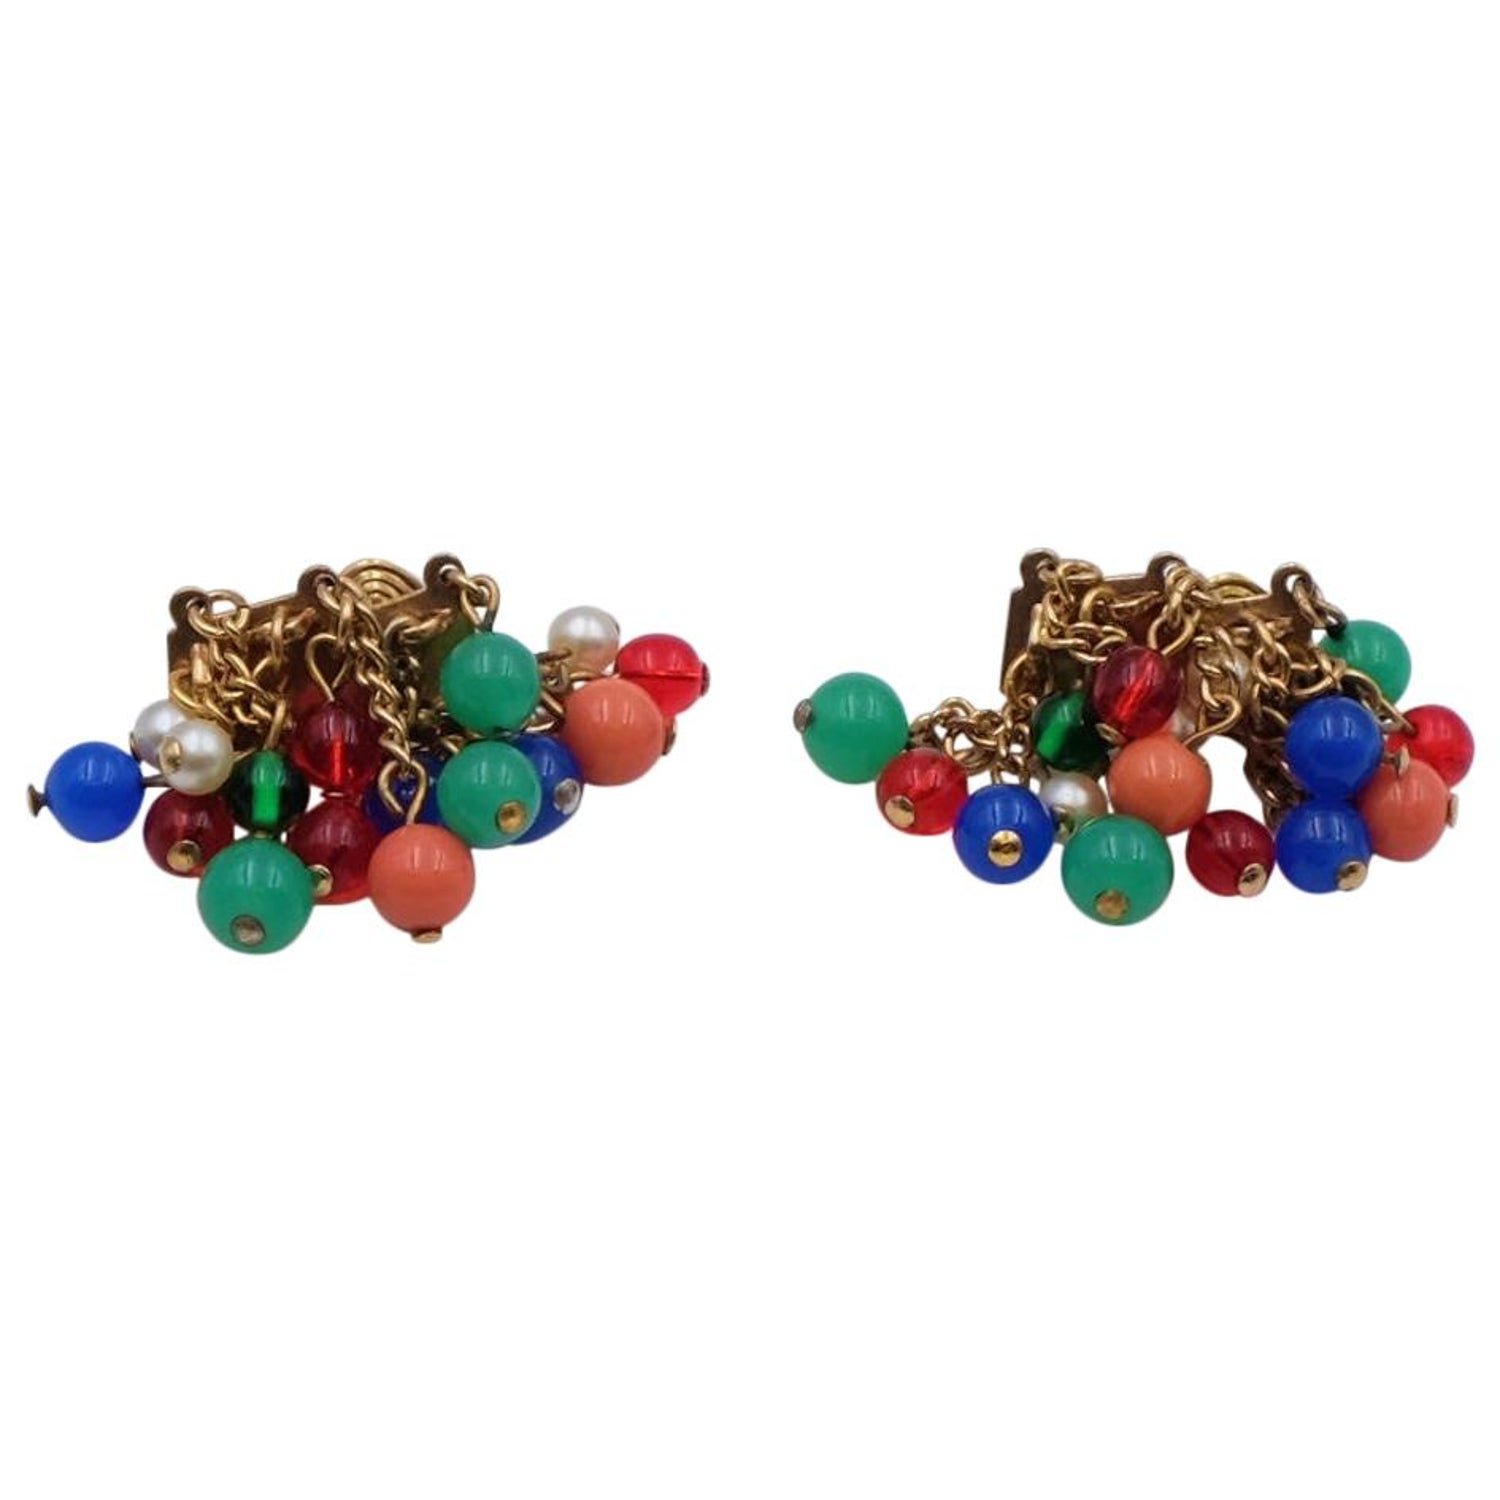 Vintage Castlecliff jewelry lot choker and earrings